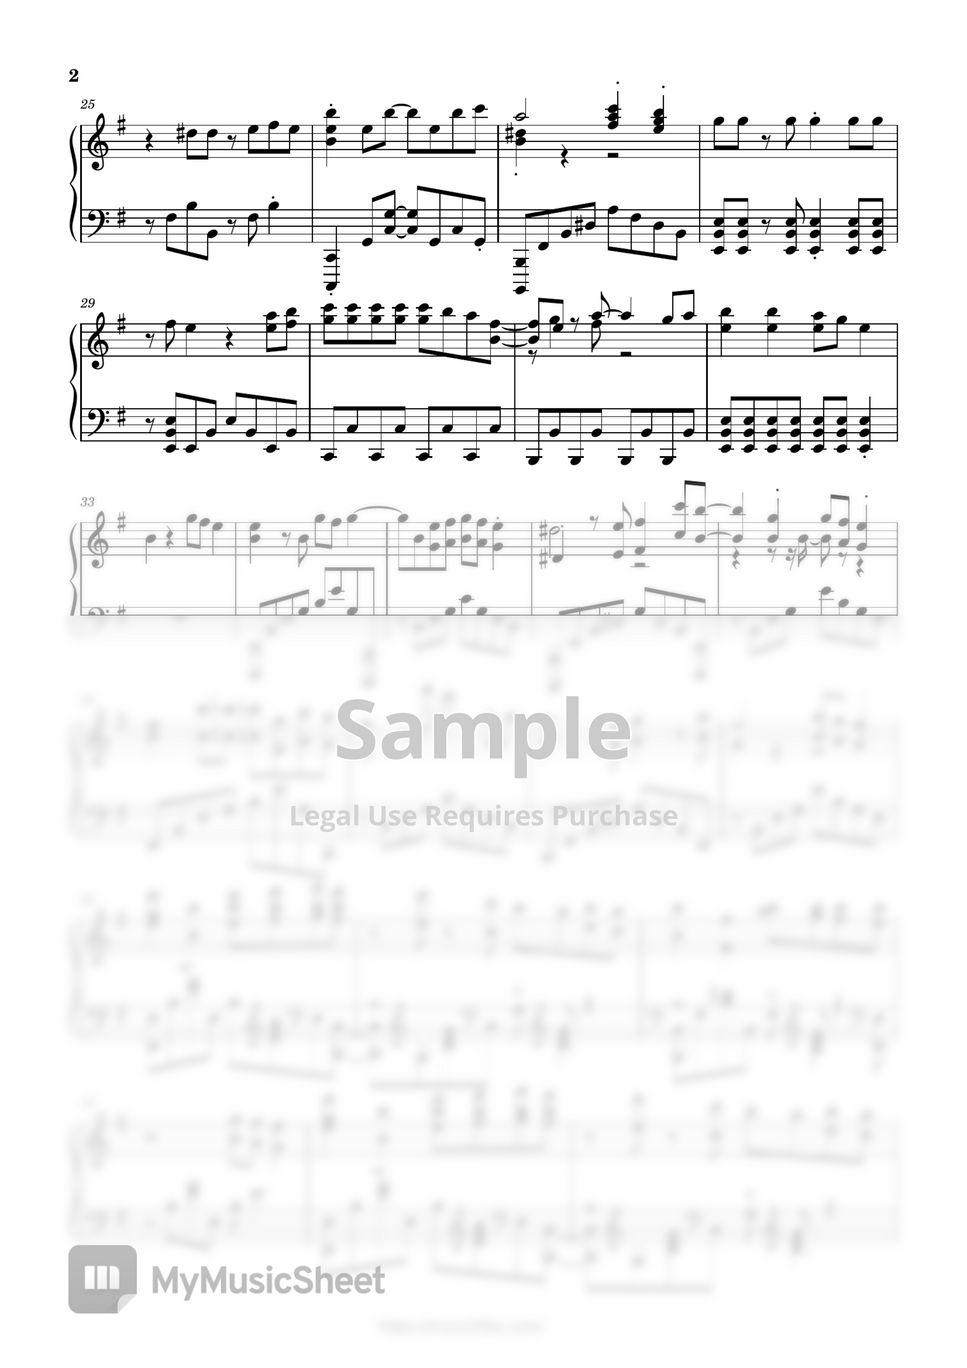 Dreamcatcher(드림캐쳐) - BEcause - Piano Sheet + MP3 + MIDI